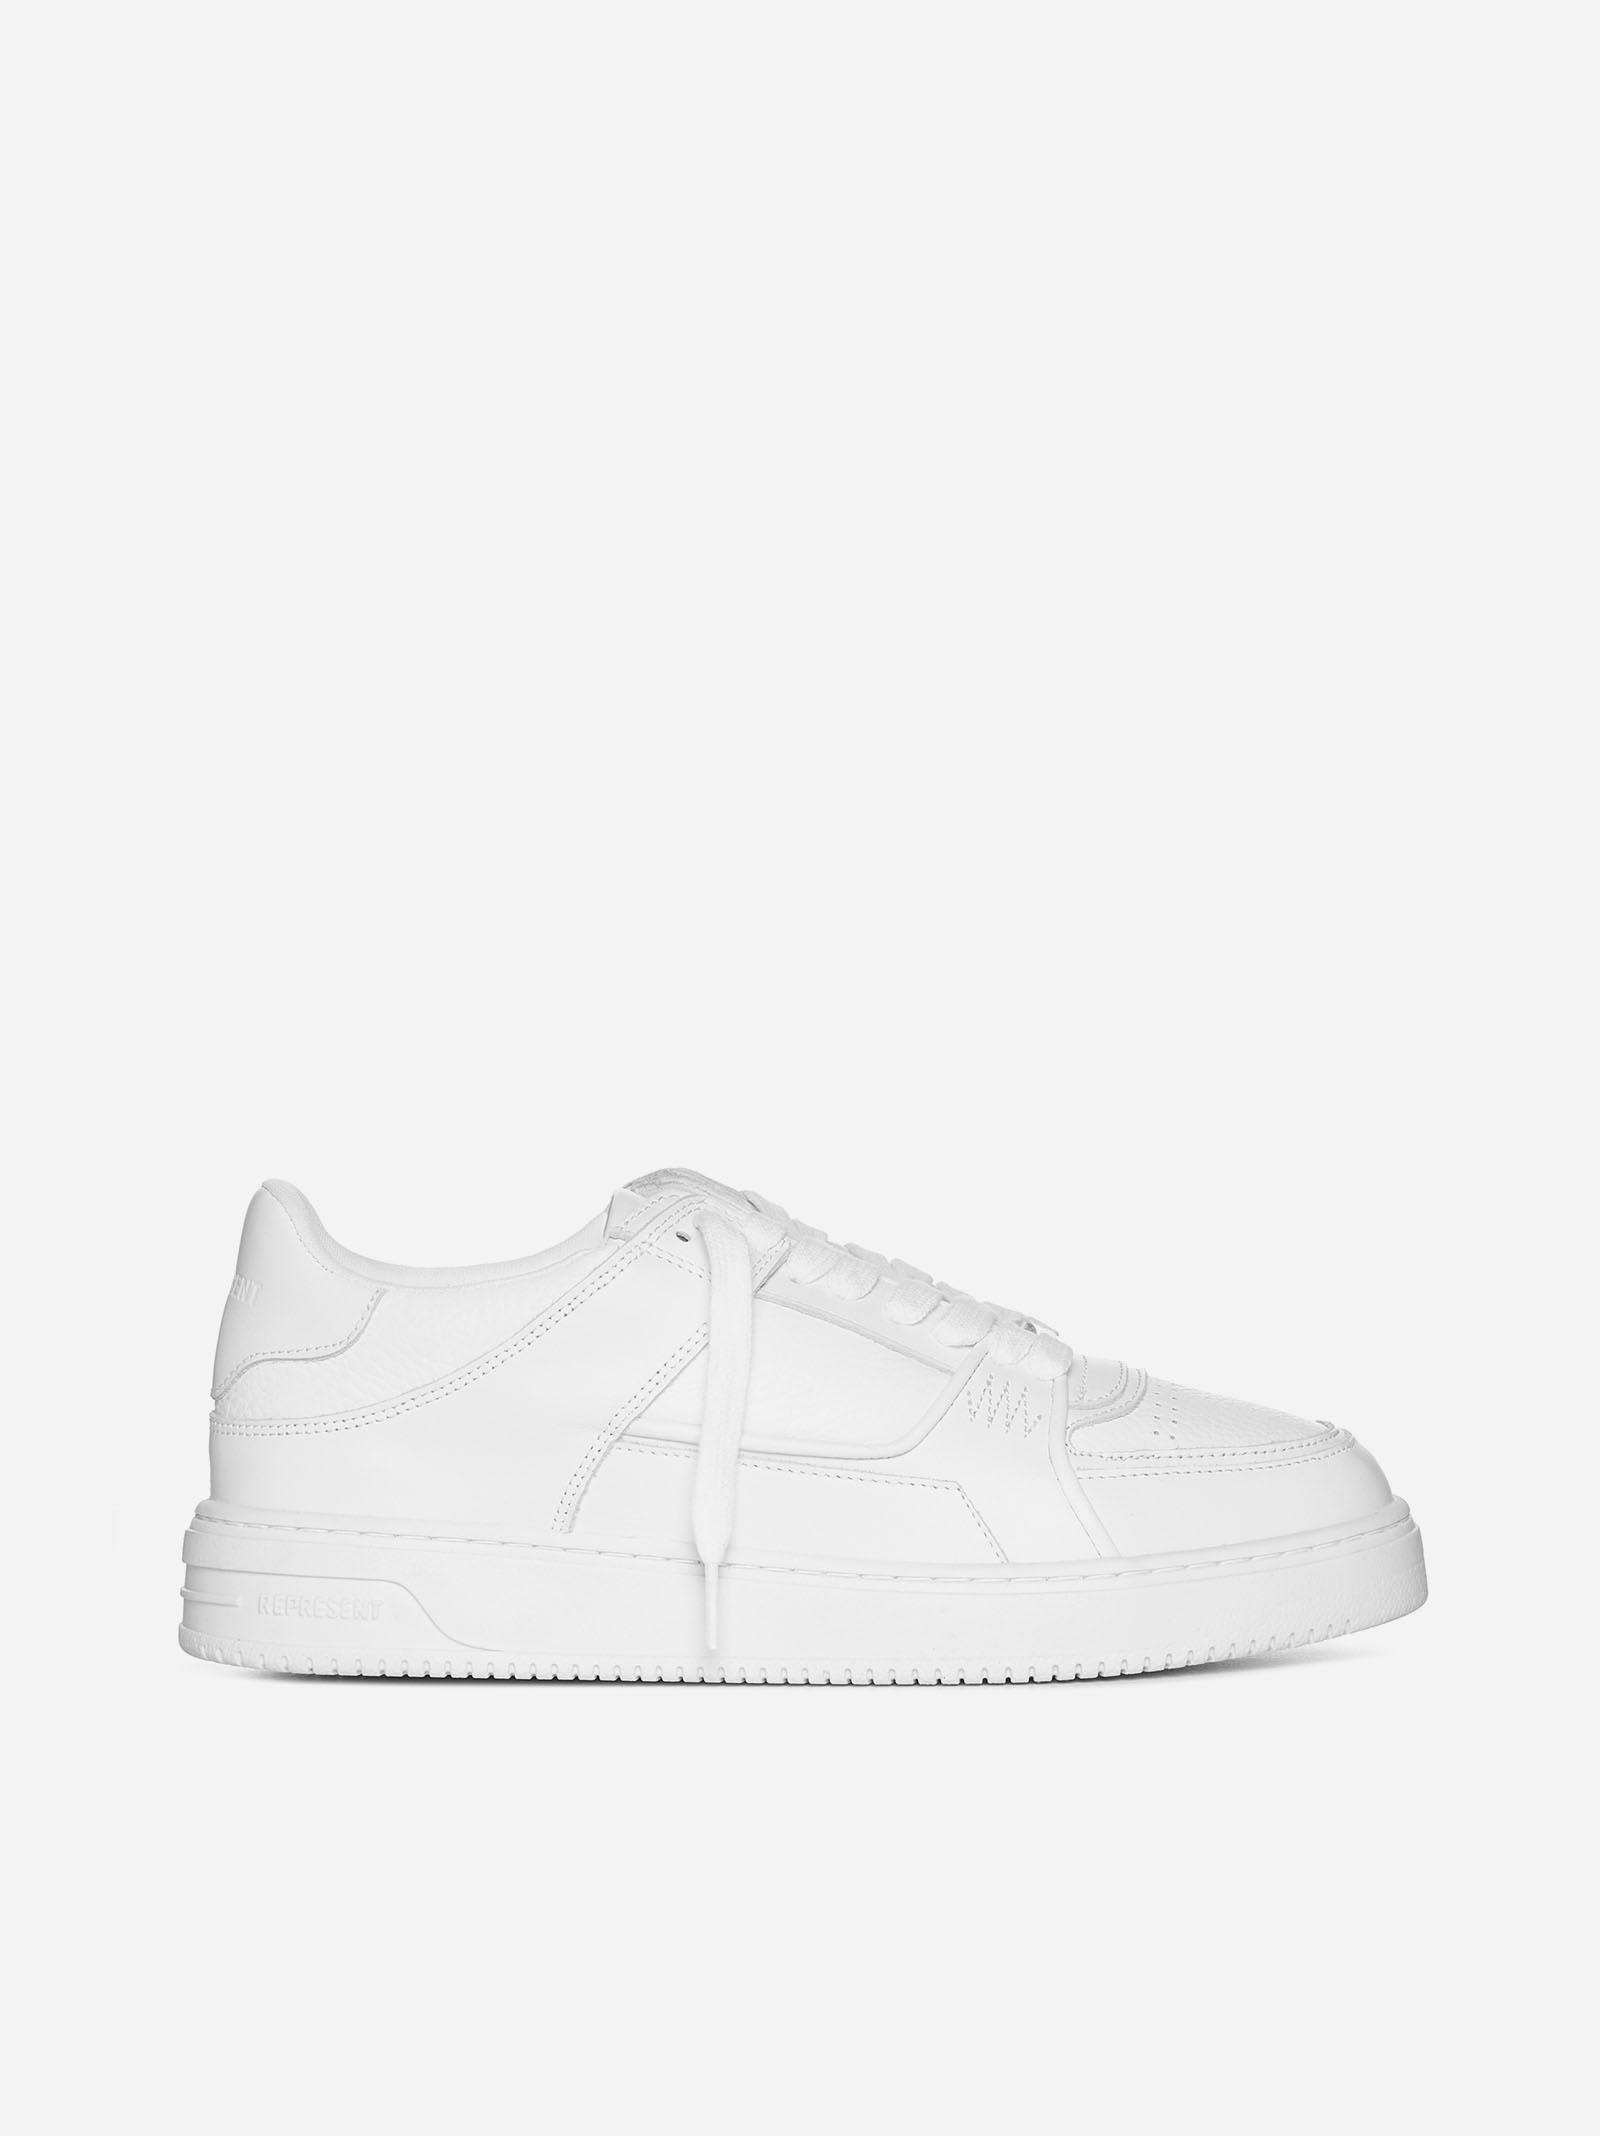 Represent Apex Nappa Leather Sneakers In White